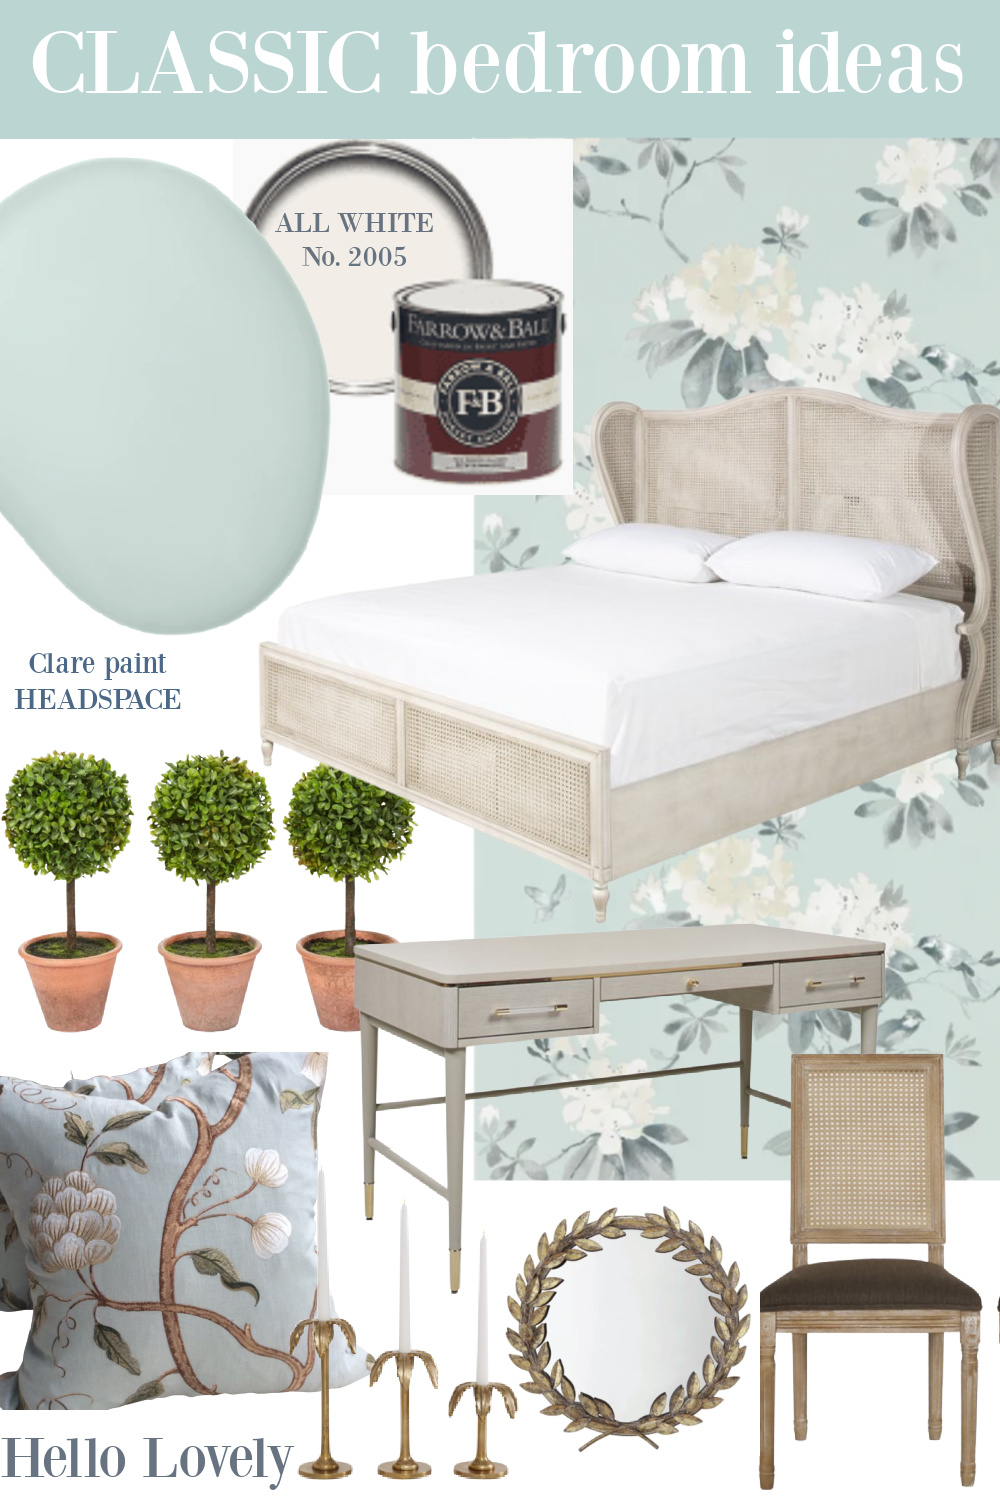 Classic Bedroom Ideas - Hello Lovely Studio. #classicdecor #bedroomdecor